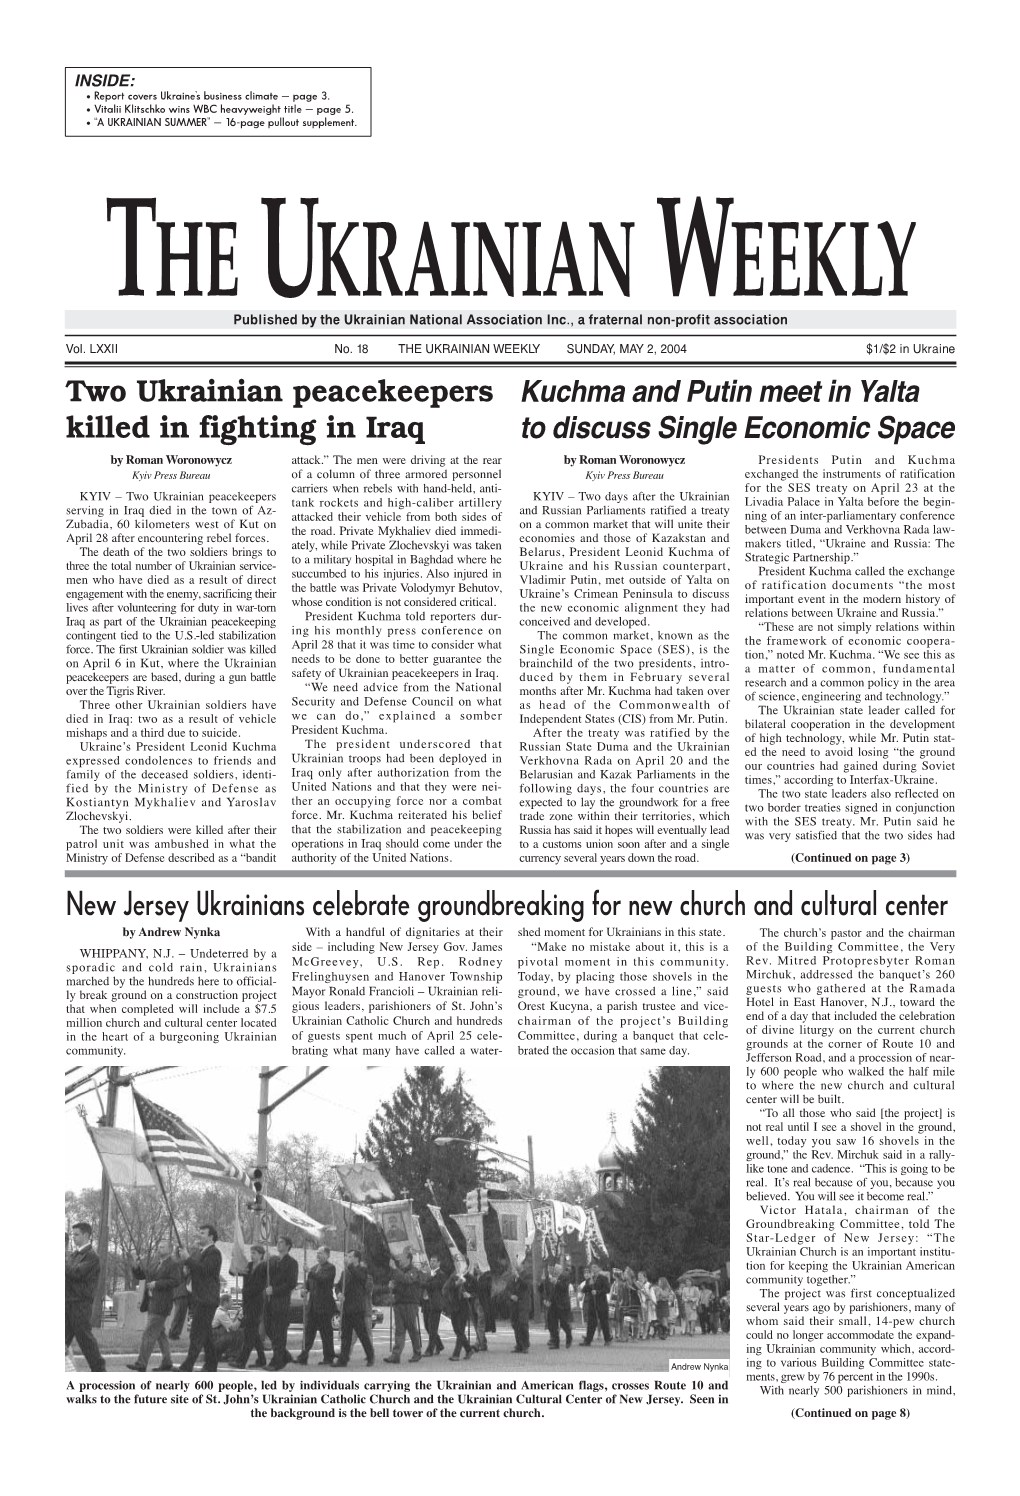 The Ukrainian Weekly 2004, No.18